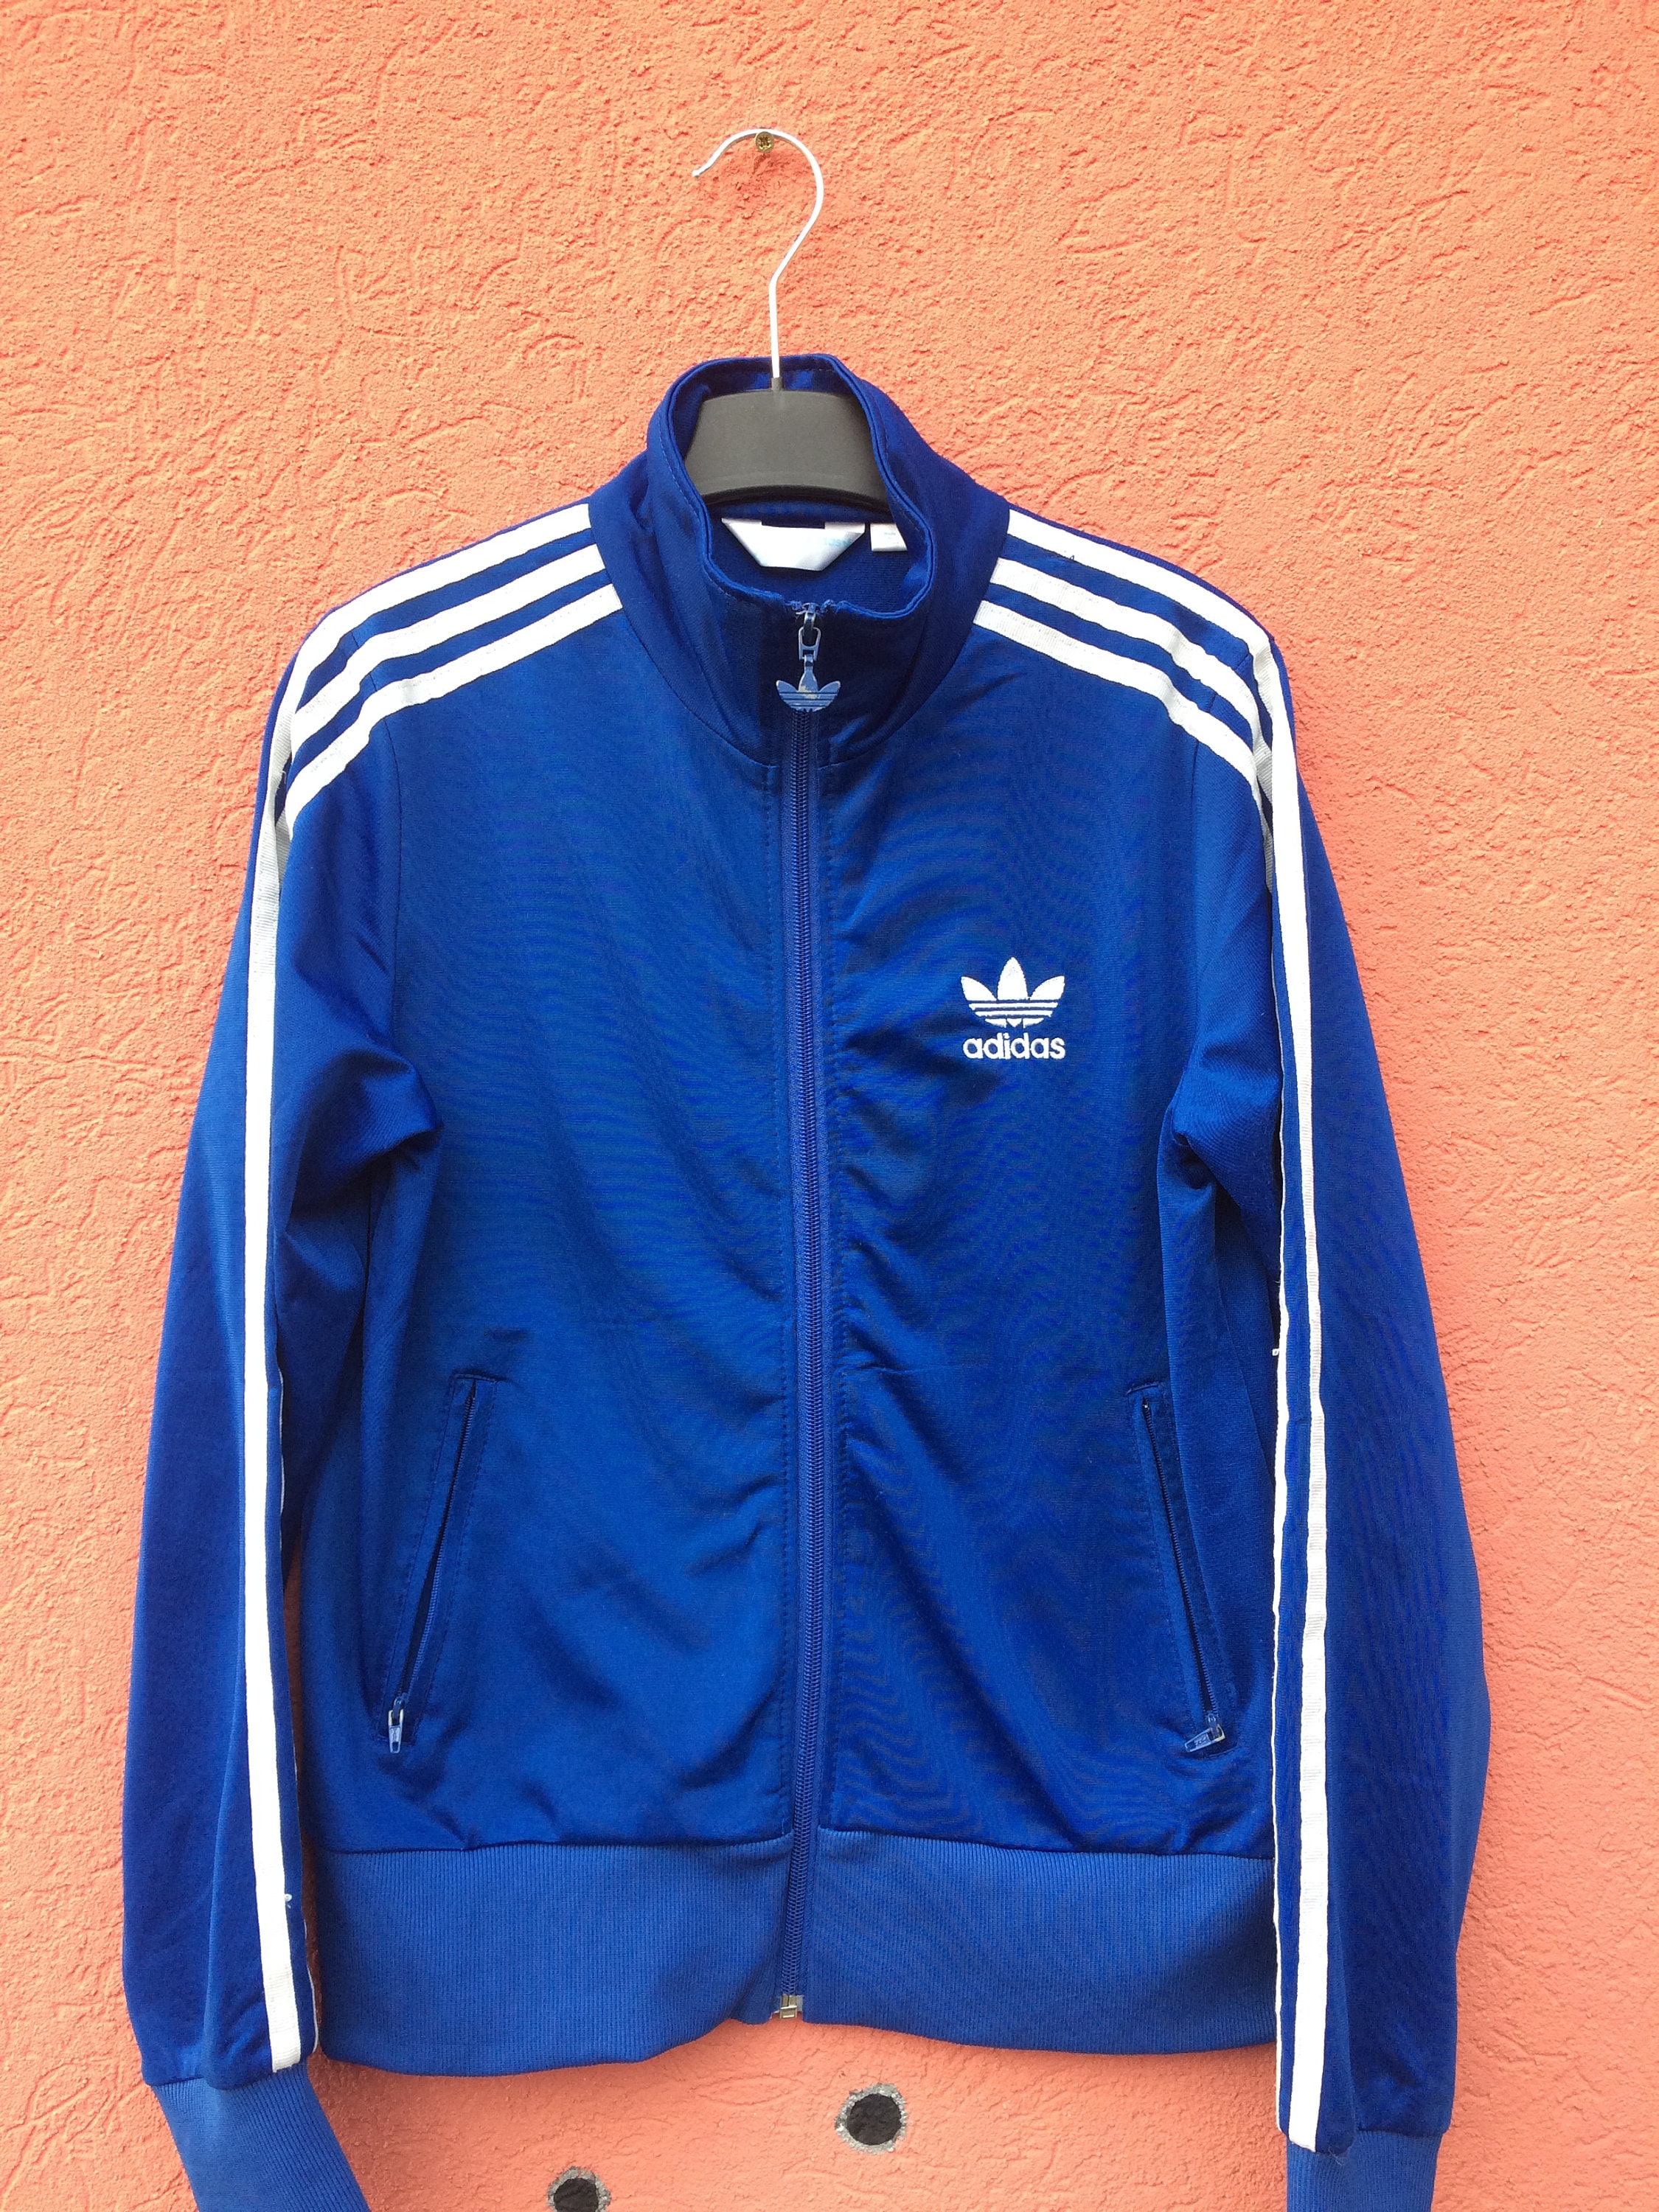 Adidas Vintage Adidas Track Jacket//blue Retro Adidas - Etsy Sweden